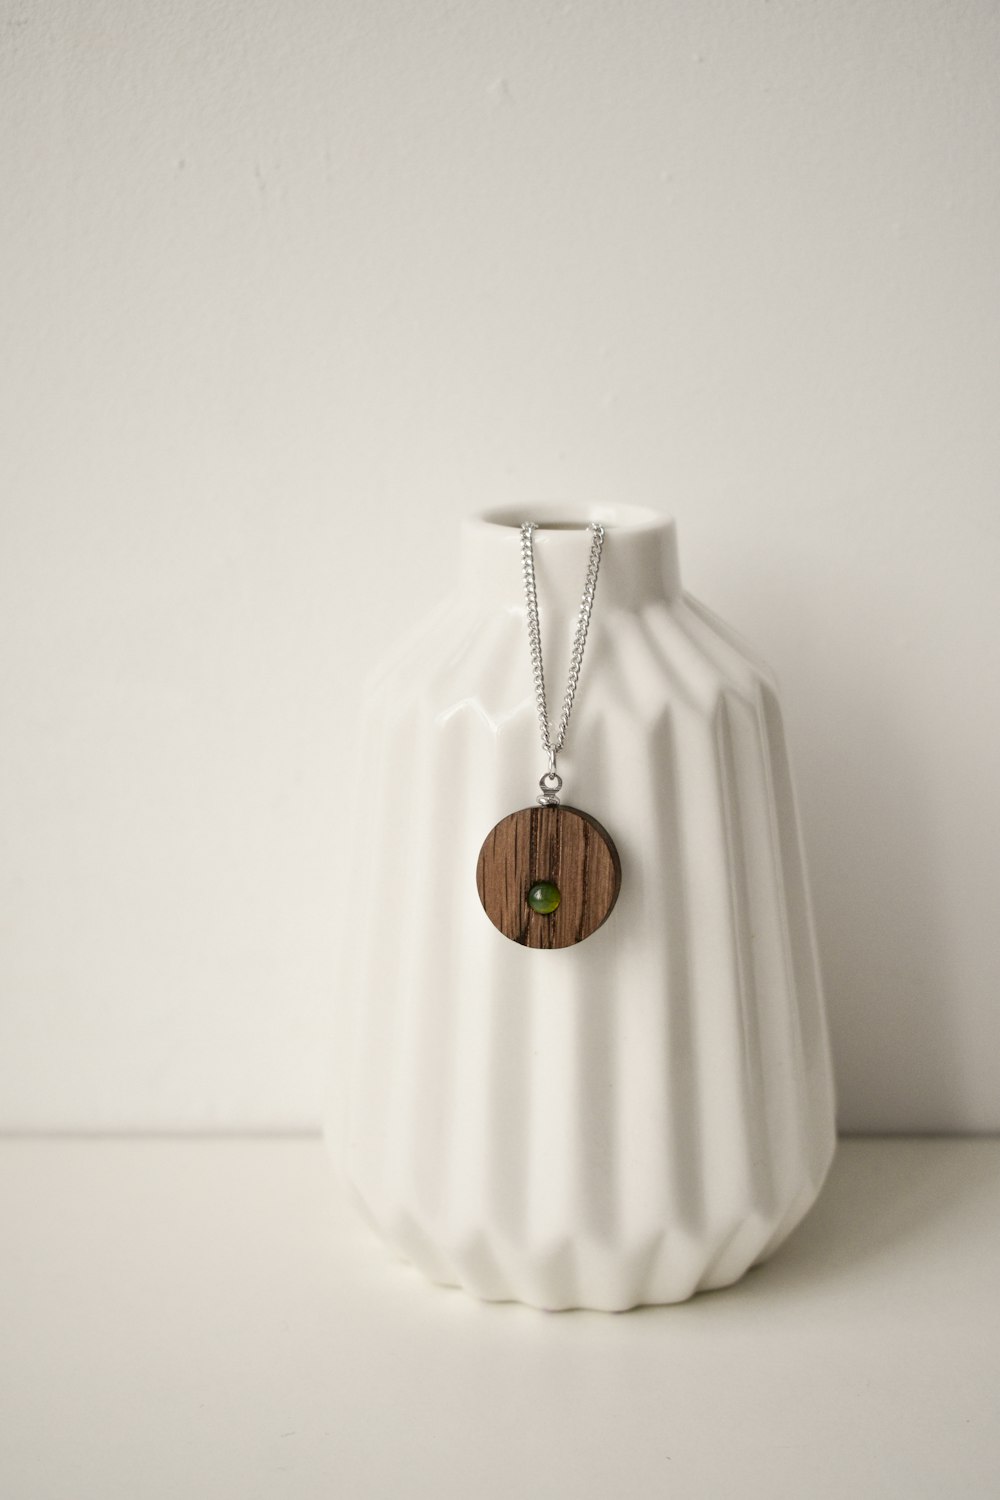 gold round pendant necklace on white textile